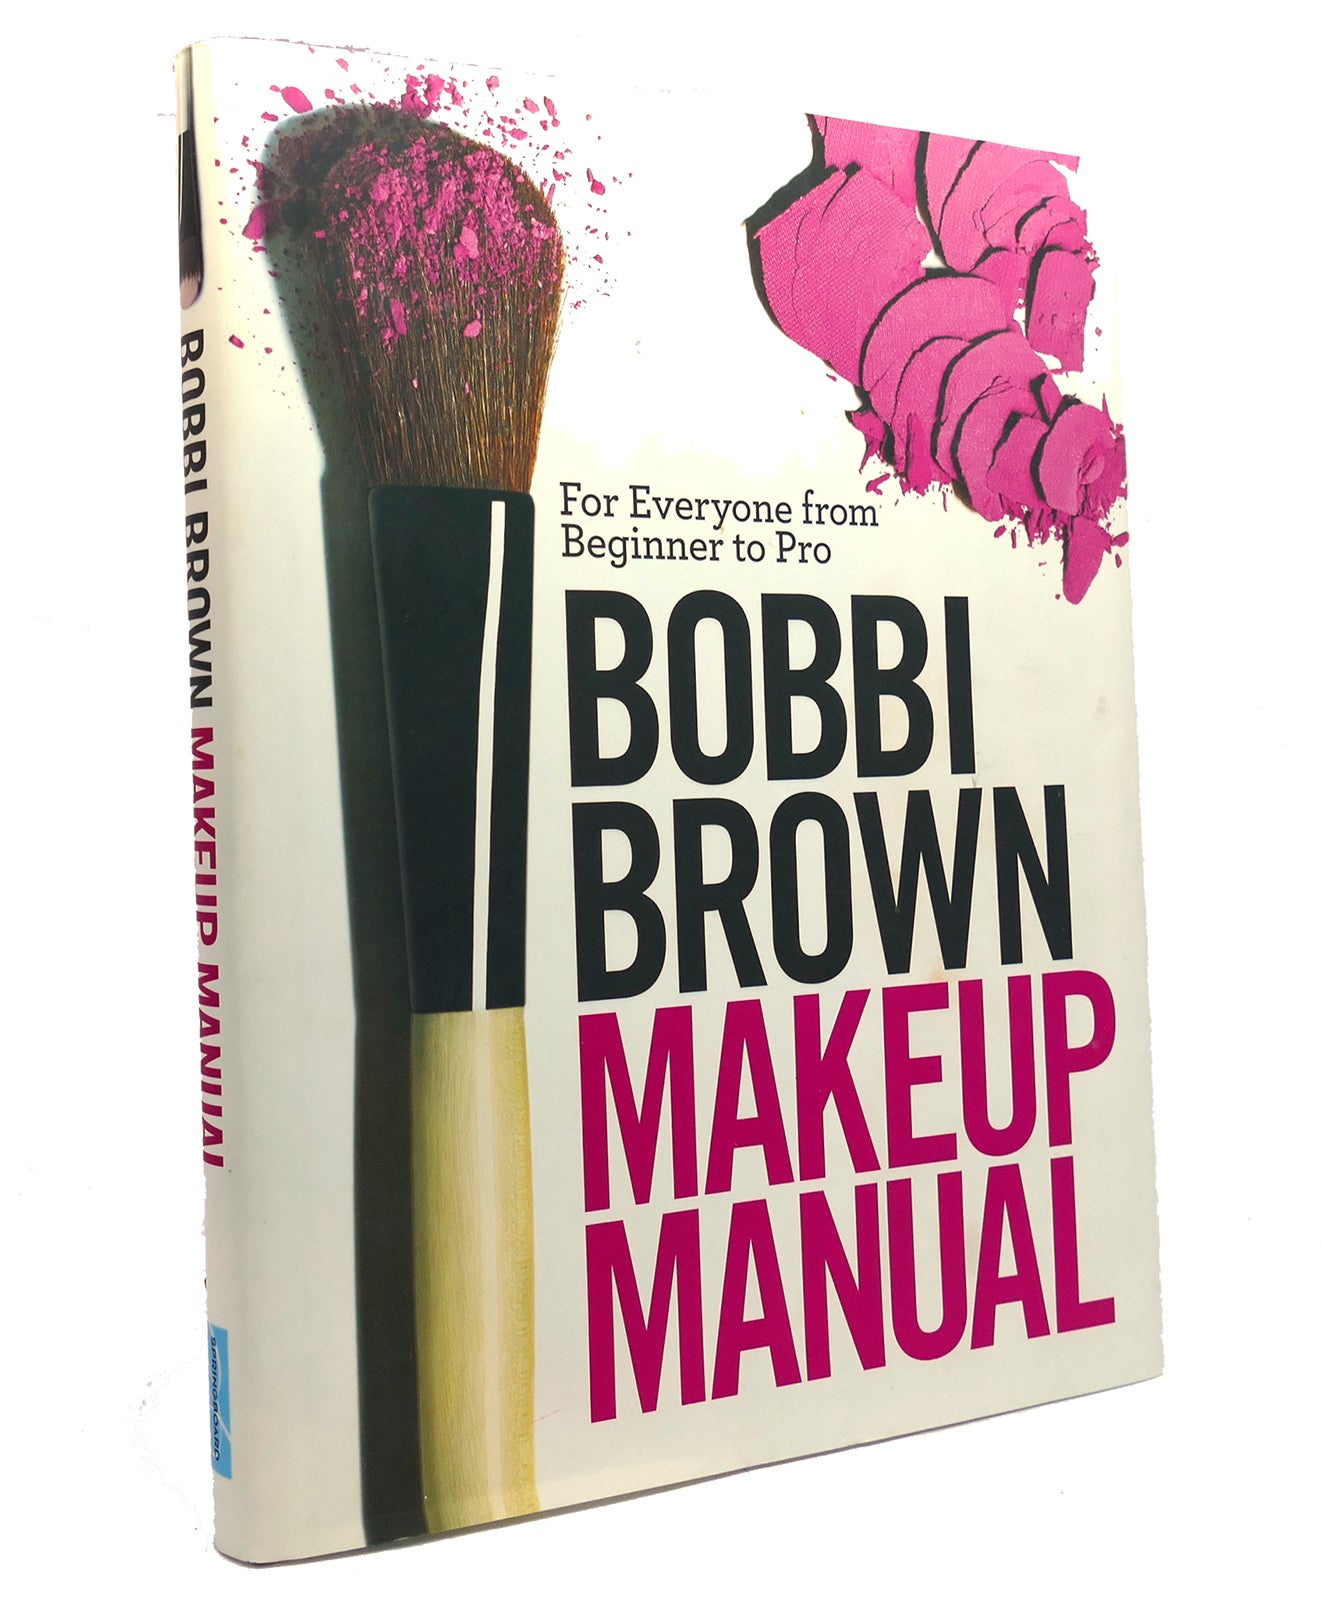 Bobbi Brown Makeup Manual: For Everyone from Beginner to Pro [Book]